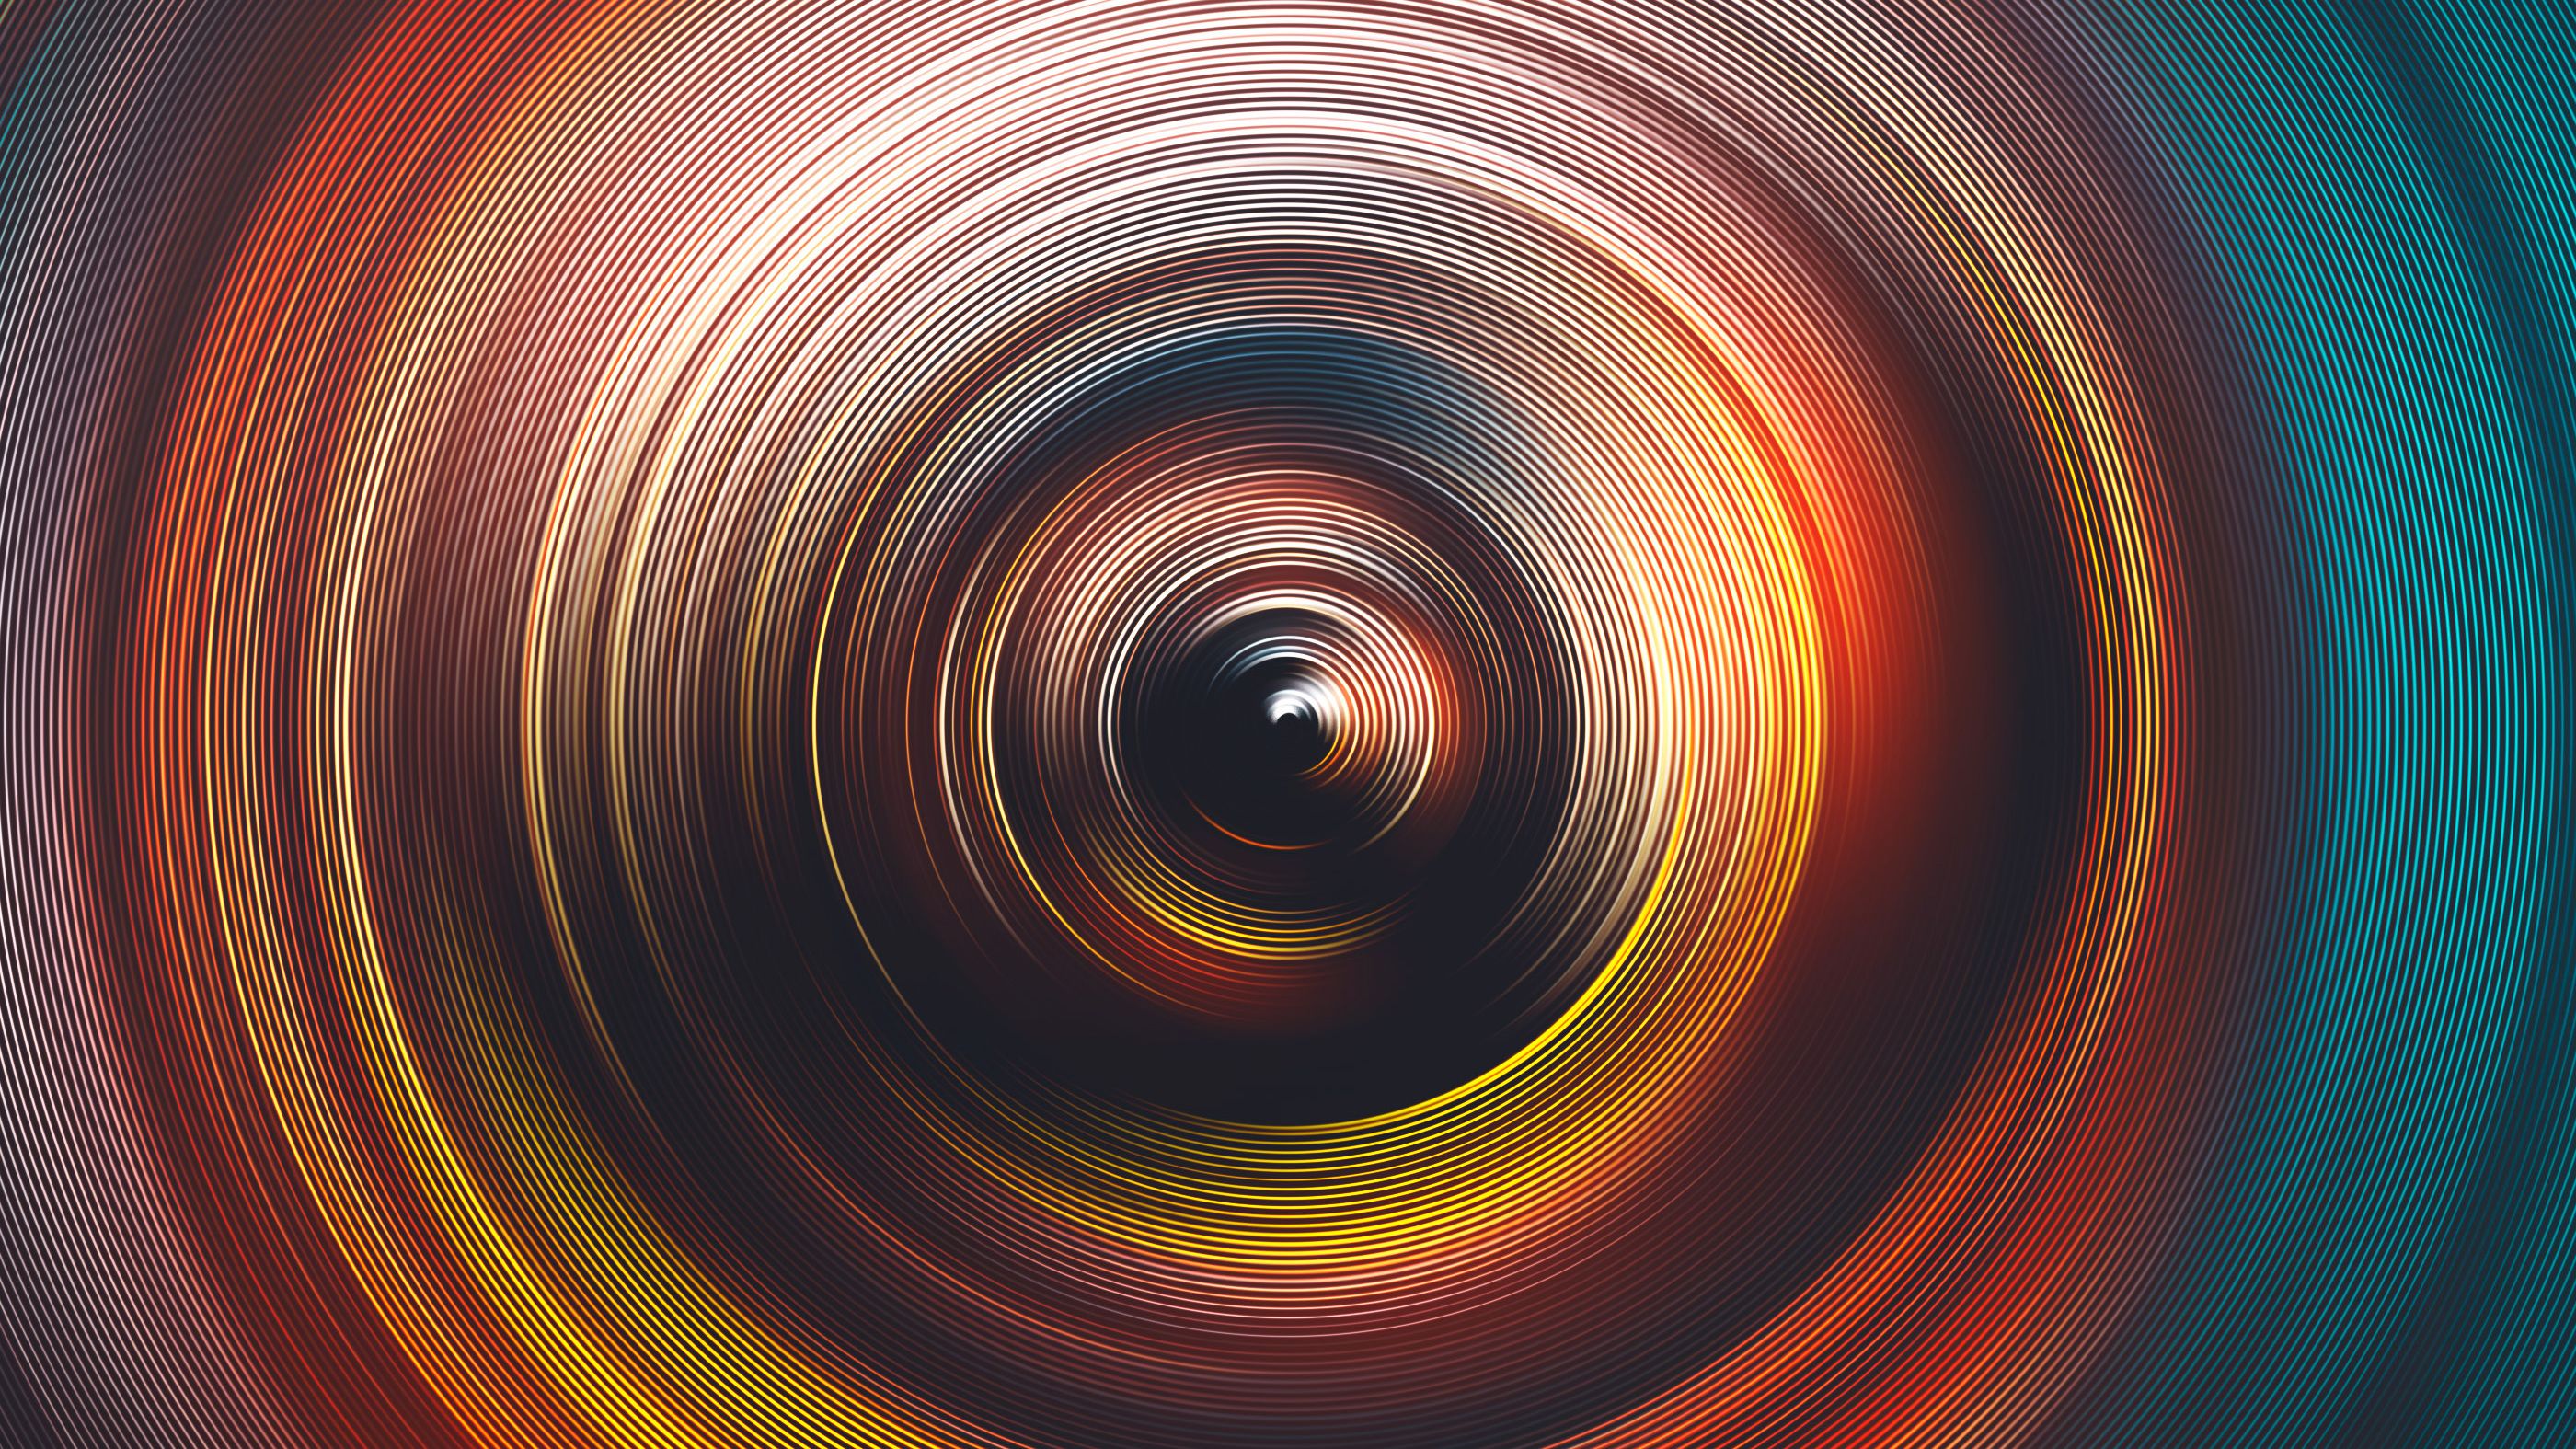 Spiral Illusion Abstract Art, HD Abstract, 4k Wallpaper, Image